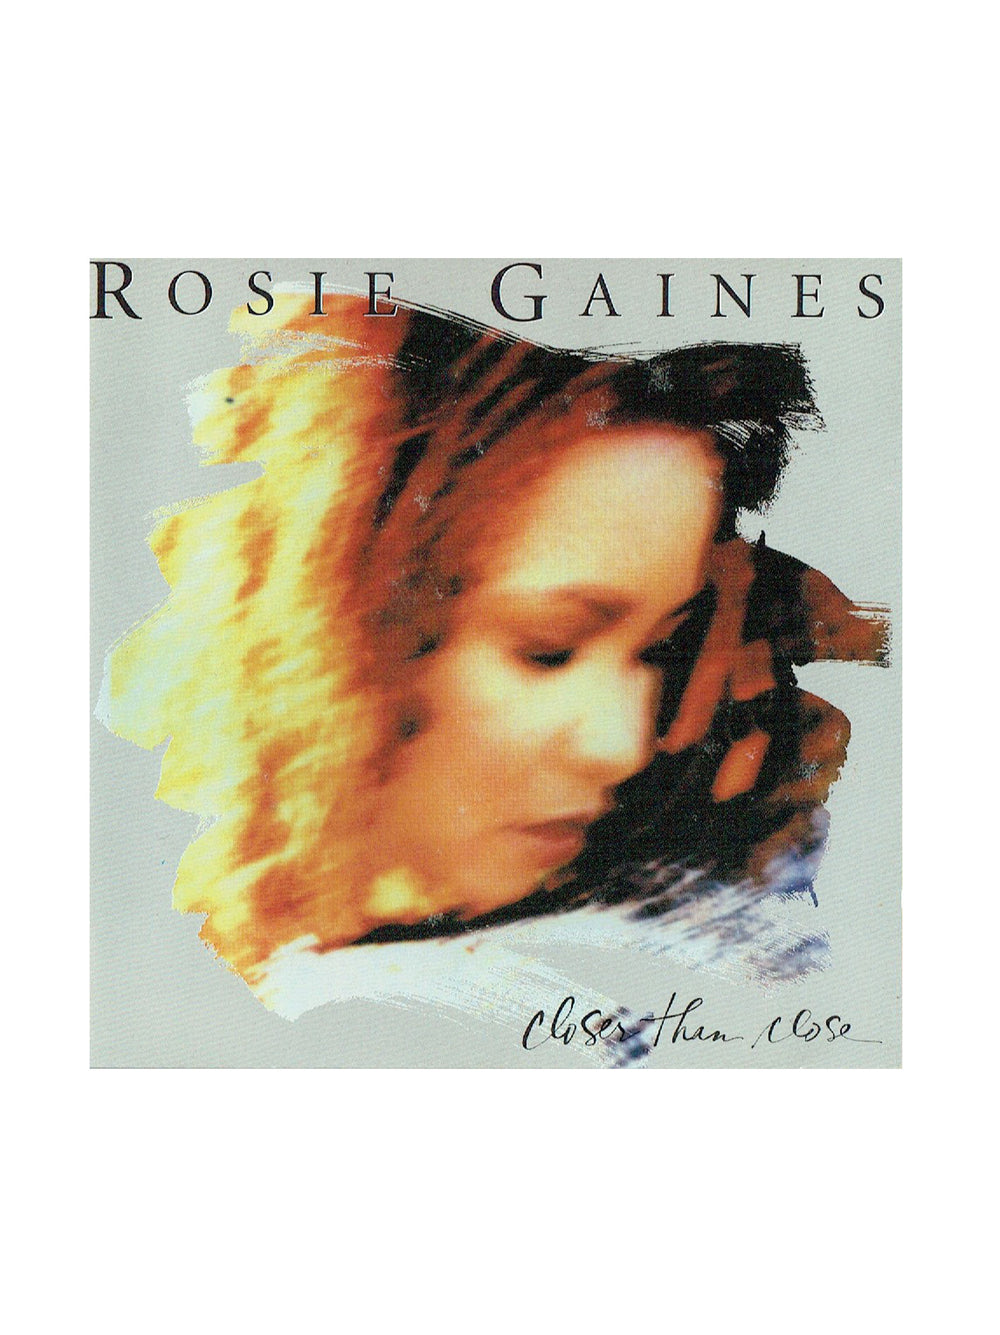 Prince – Rosie Gaines Closer Than Close CD Album EU Preloved: 1995